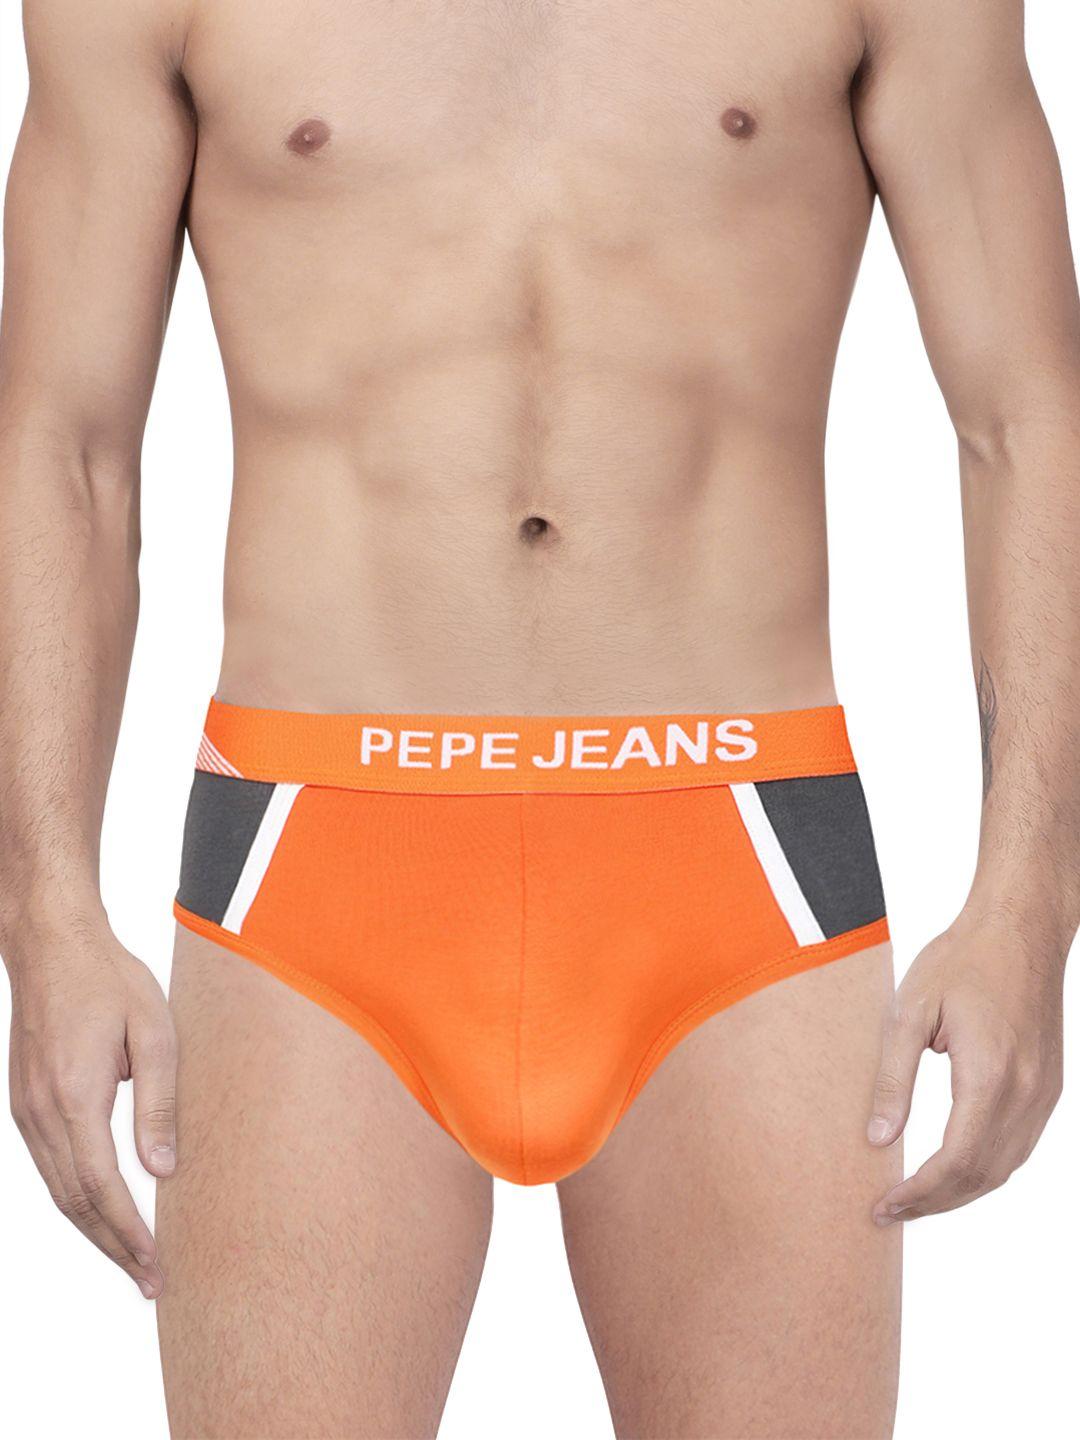 pepe jeans men orange & grey colourblocked briefs 8904311303756